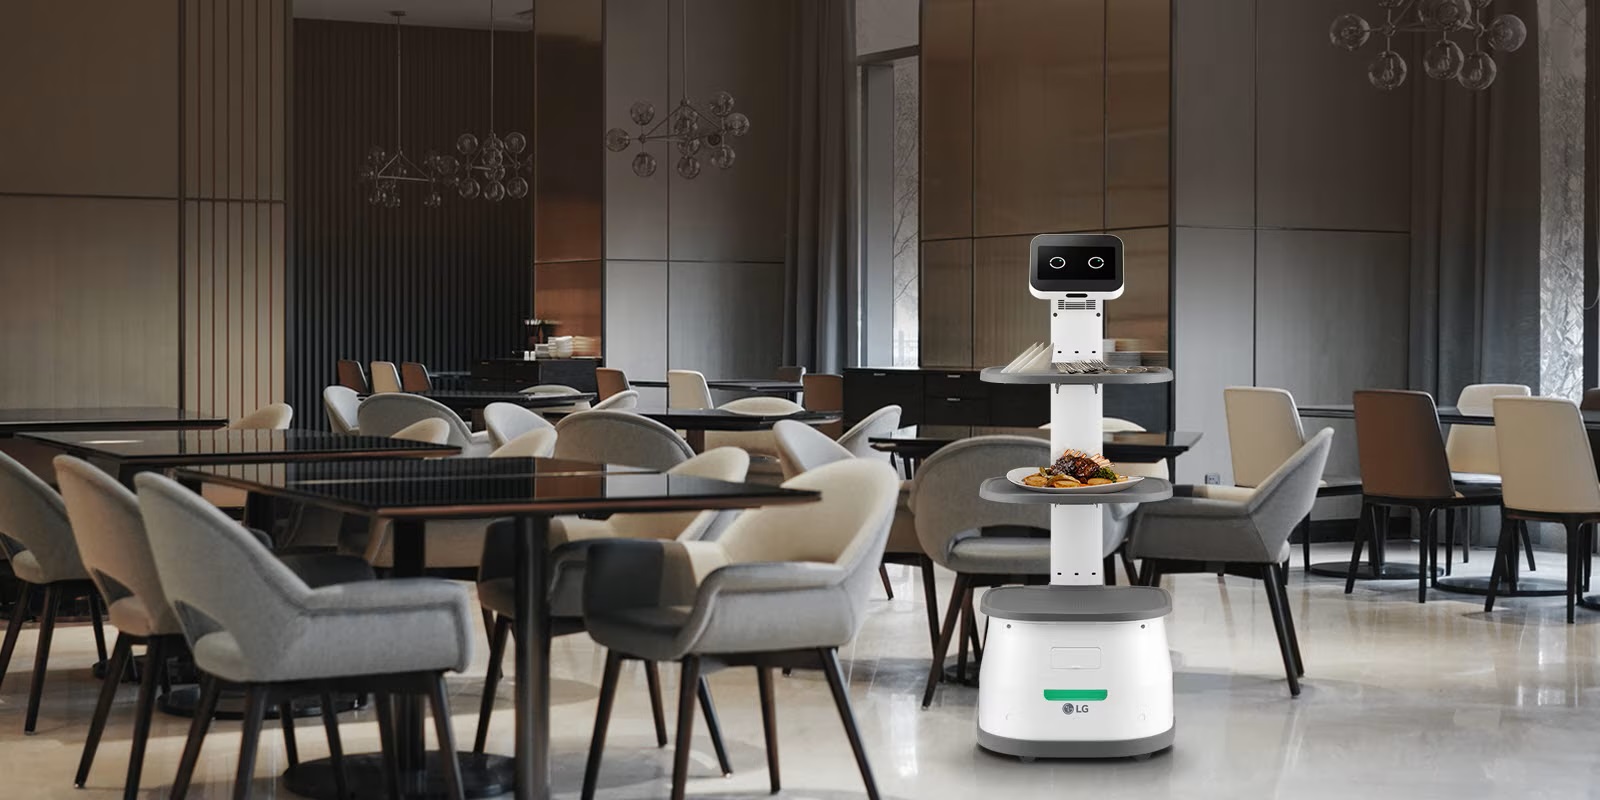 LG CLOi robot serving dishes at a restaurant